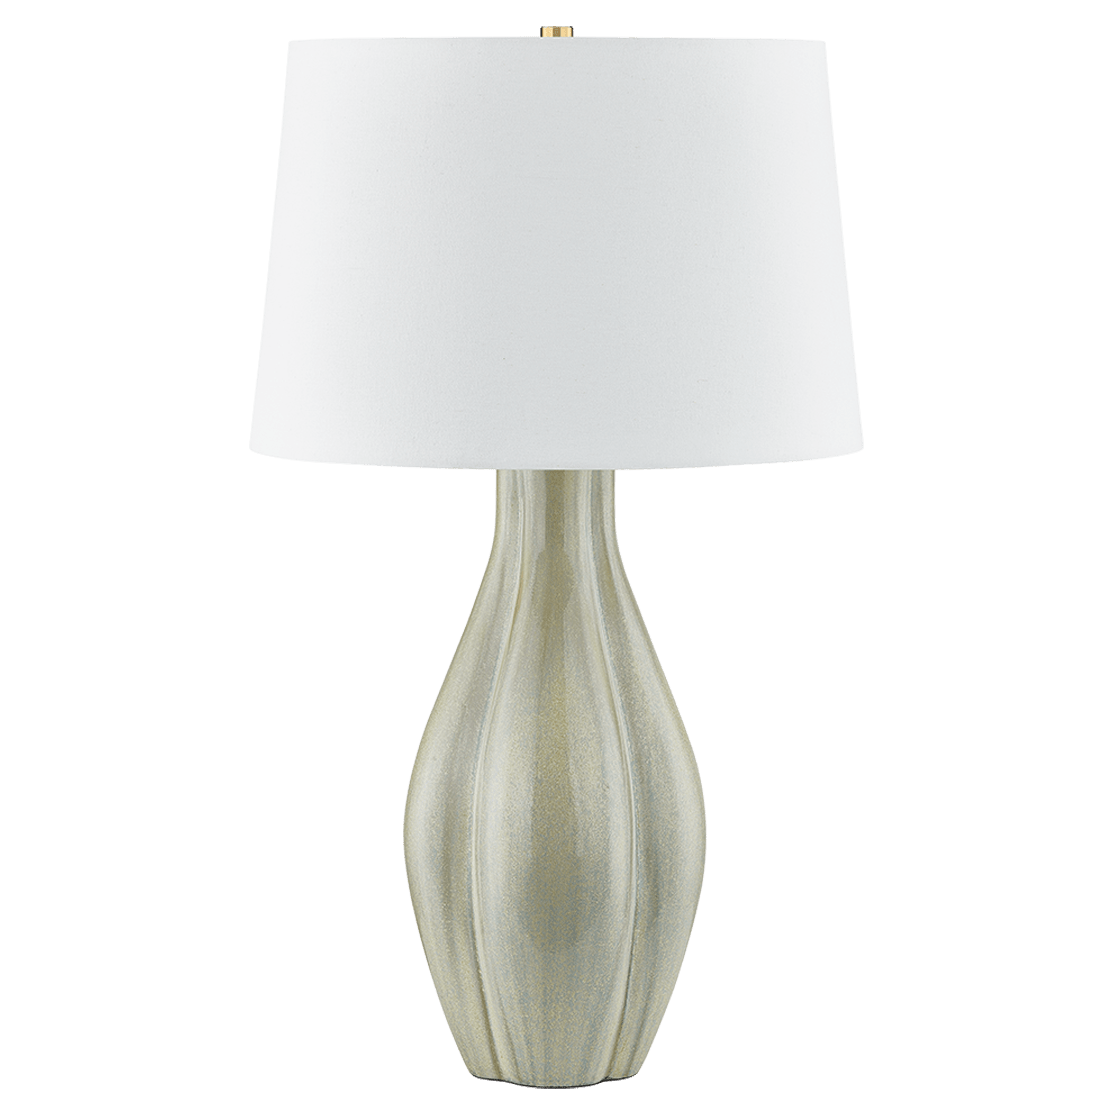 Galloway Table Lamp Ceramic Table Lamp L7231-AGB/C02